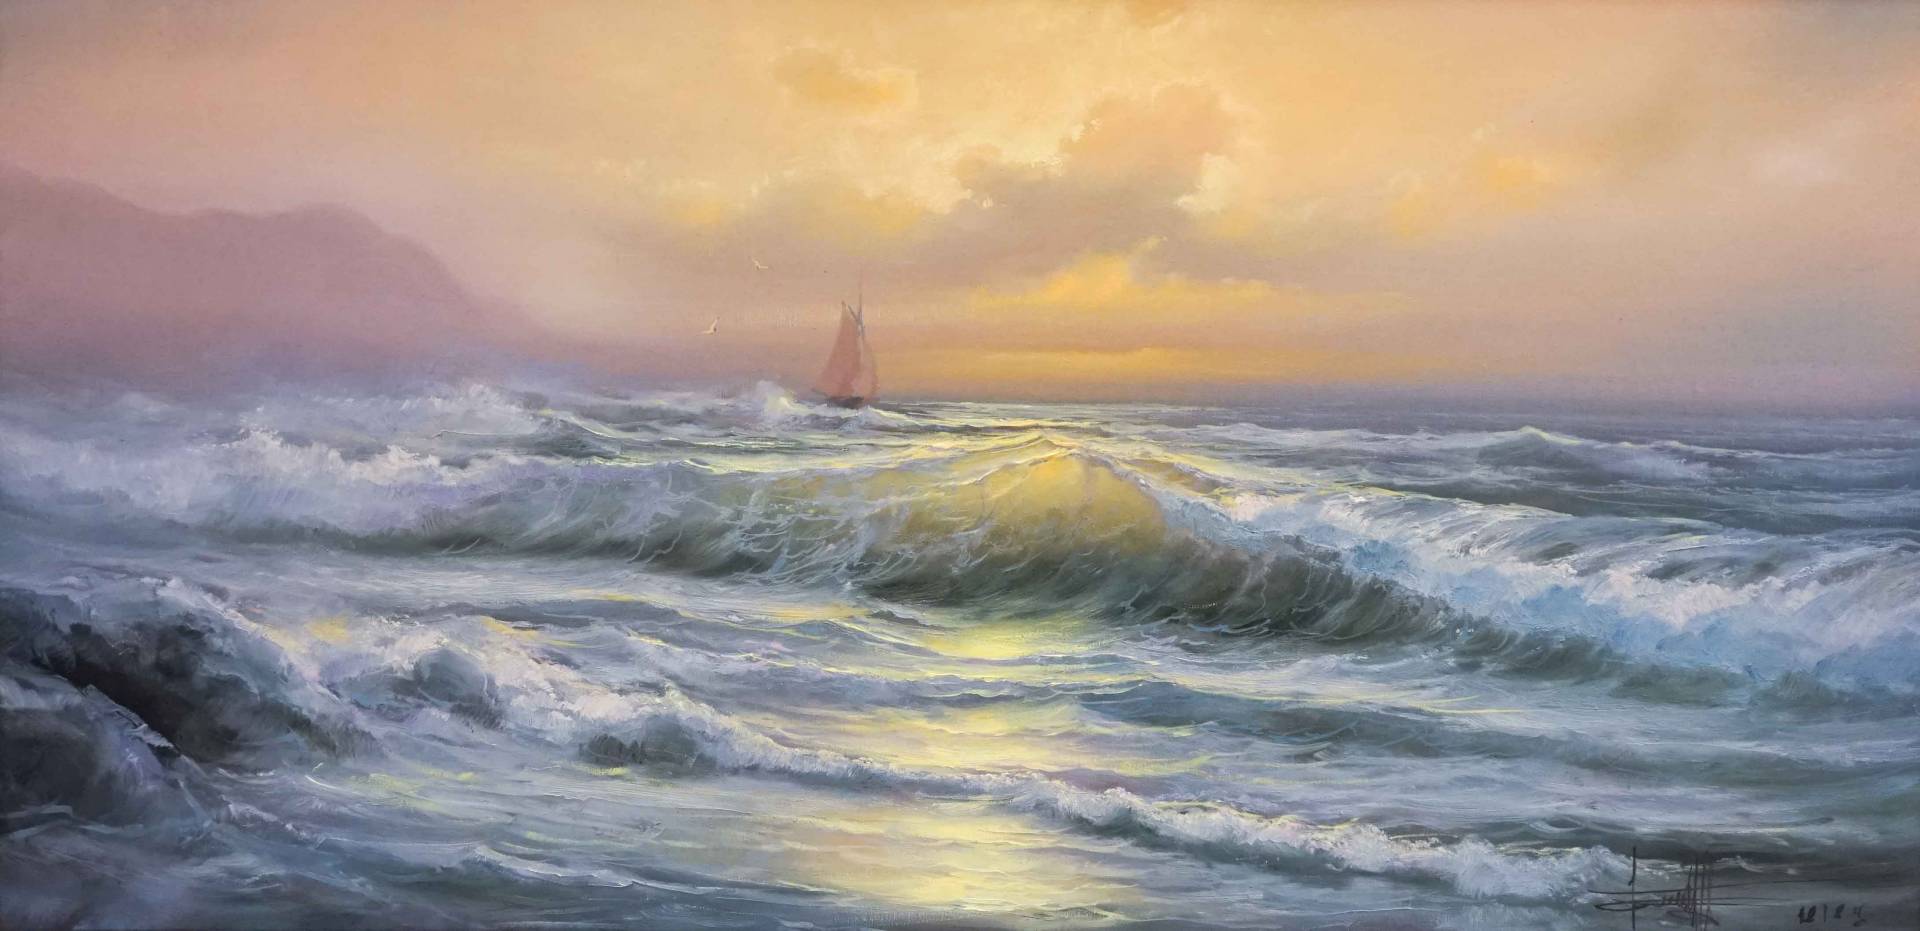 Sea Surf - 1, Dmitry Balakhonov, Buy the painting Oil